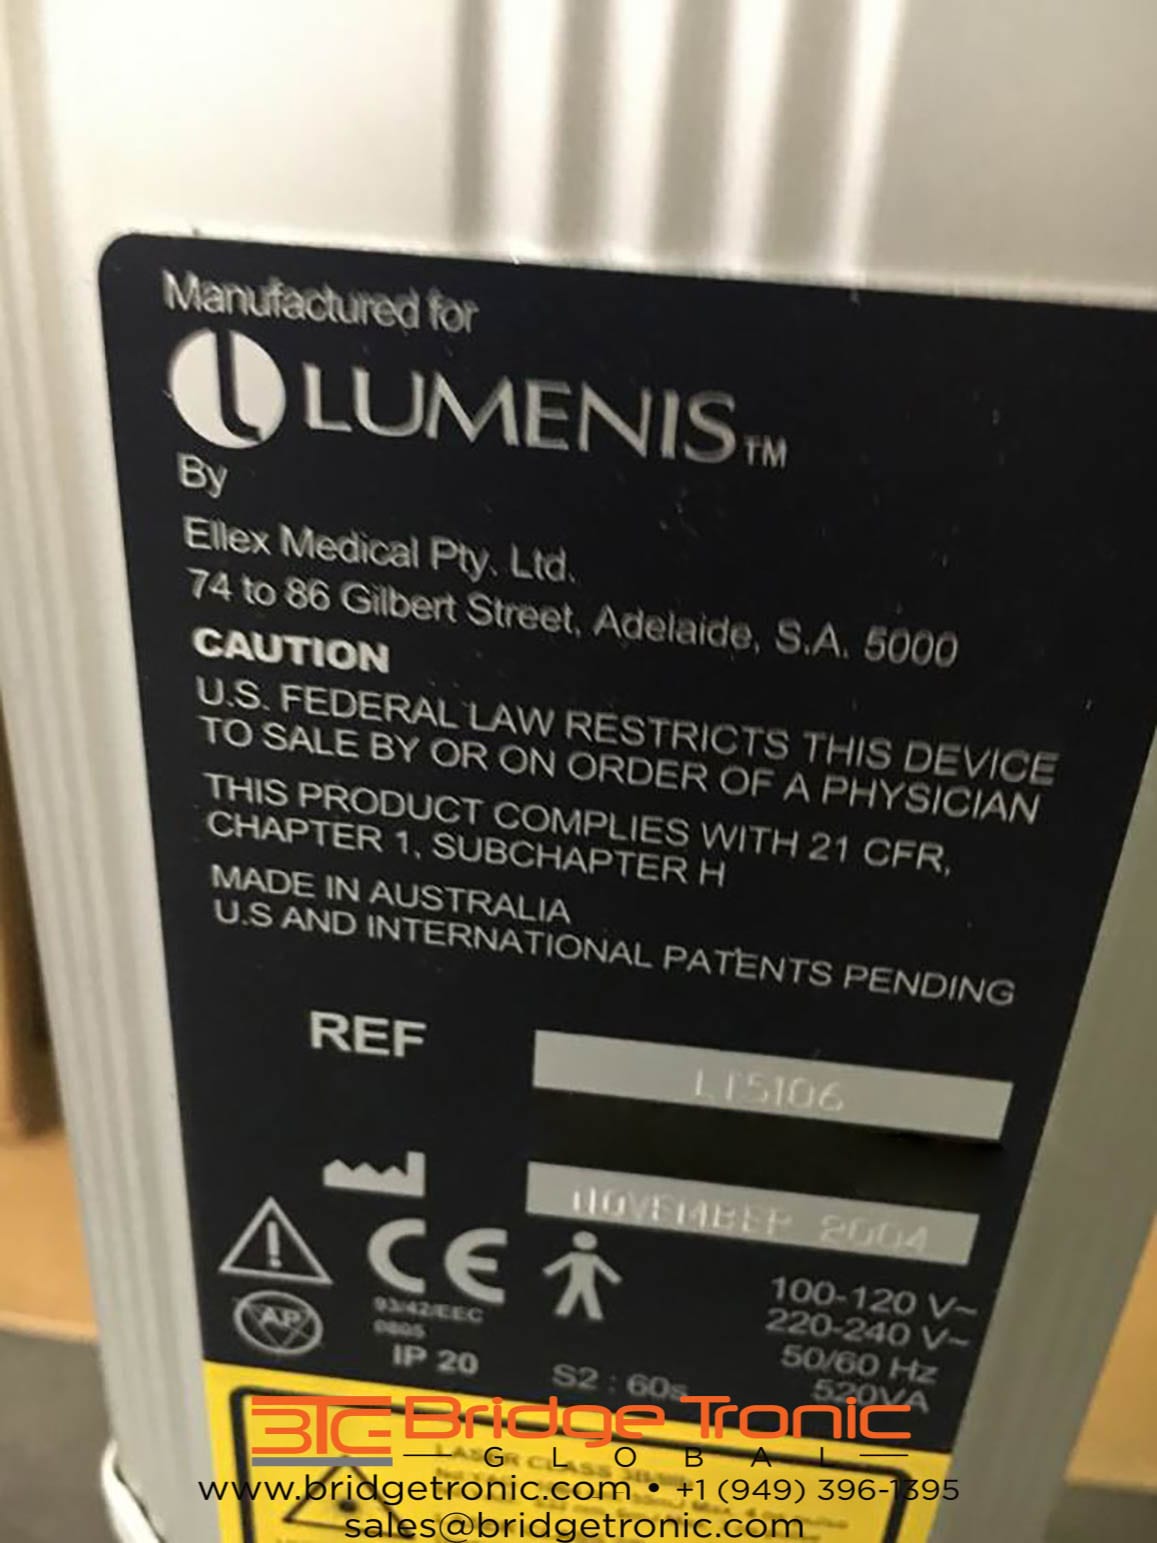 Lumenis-LT 5106 Selecta Duet-Ophthalmic YAG SLT Combination Laser-59885